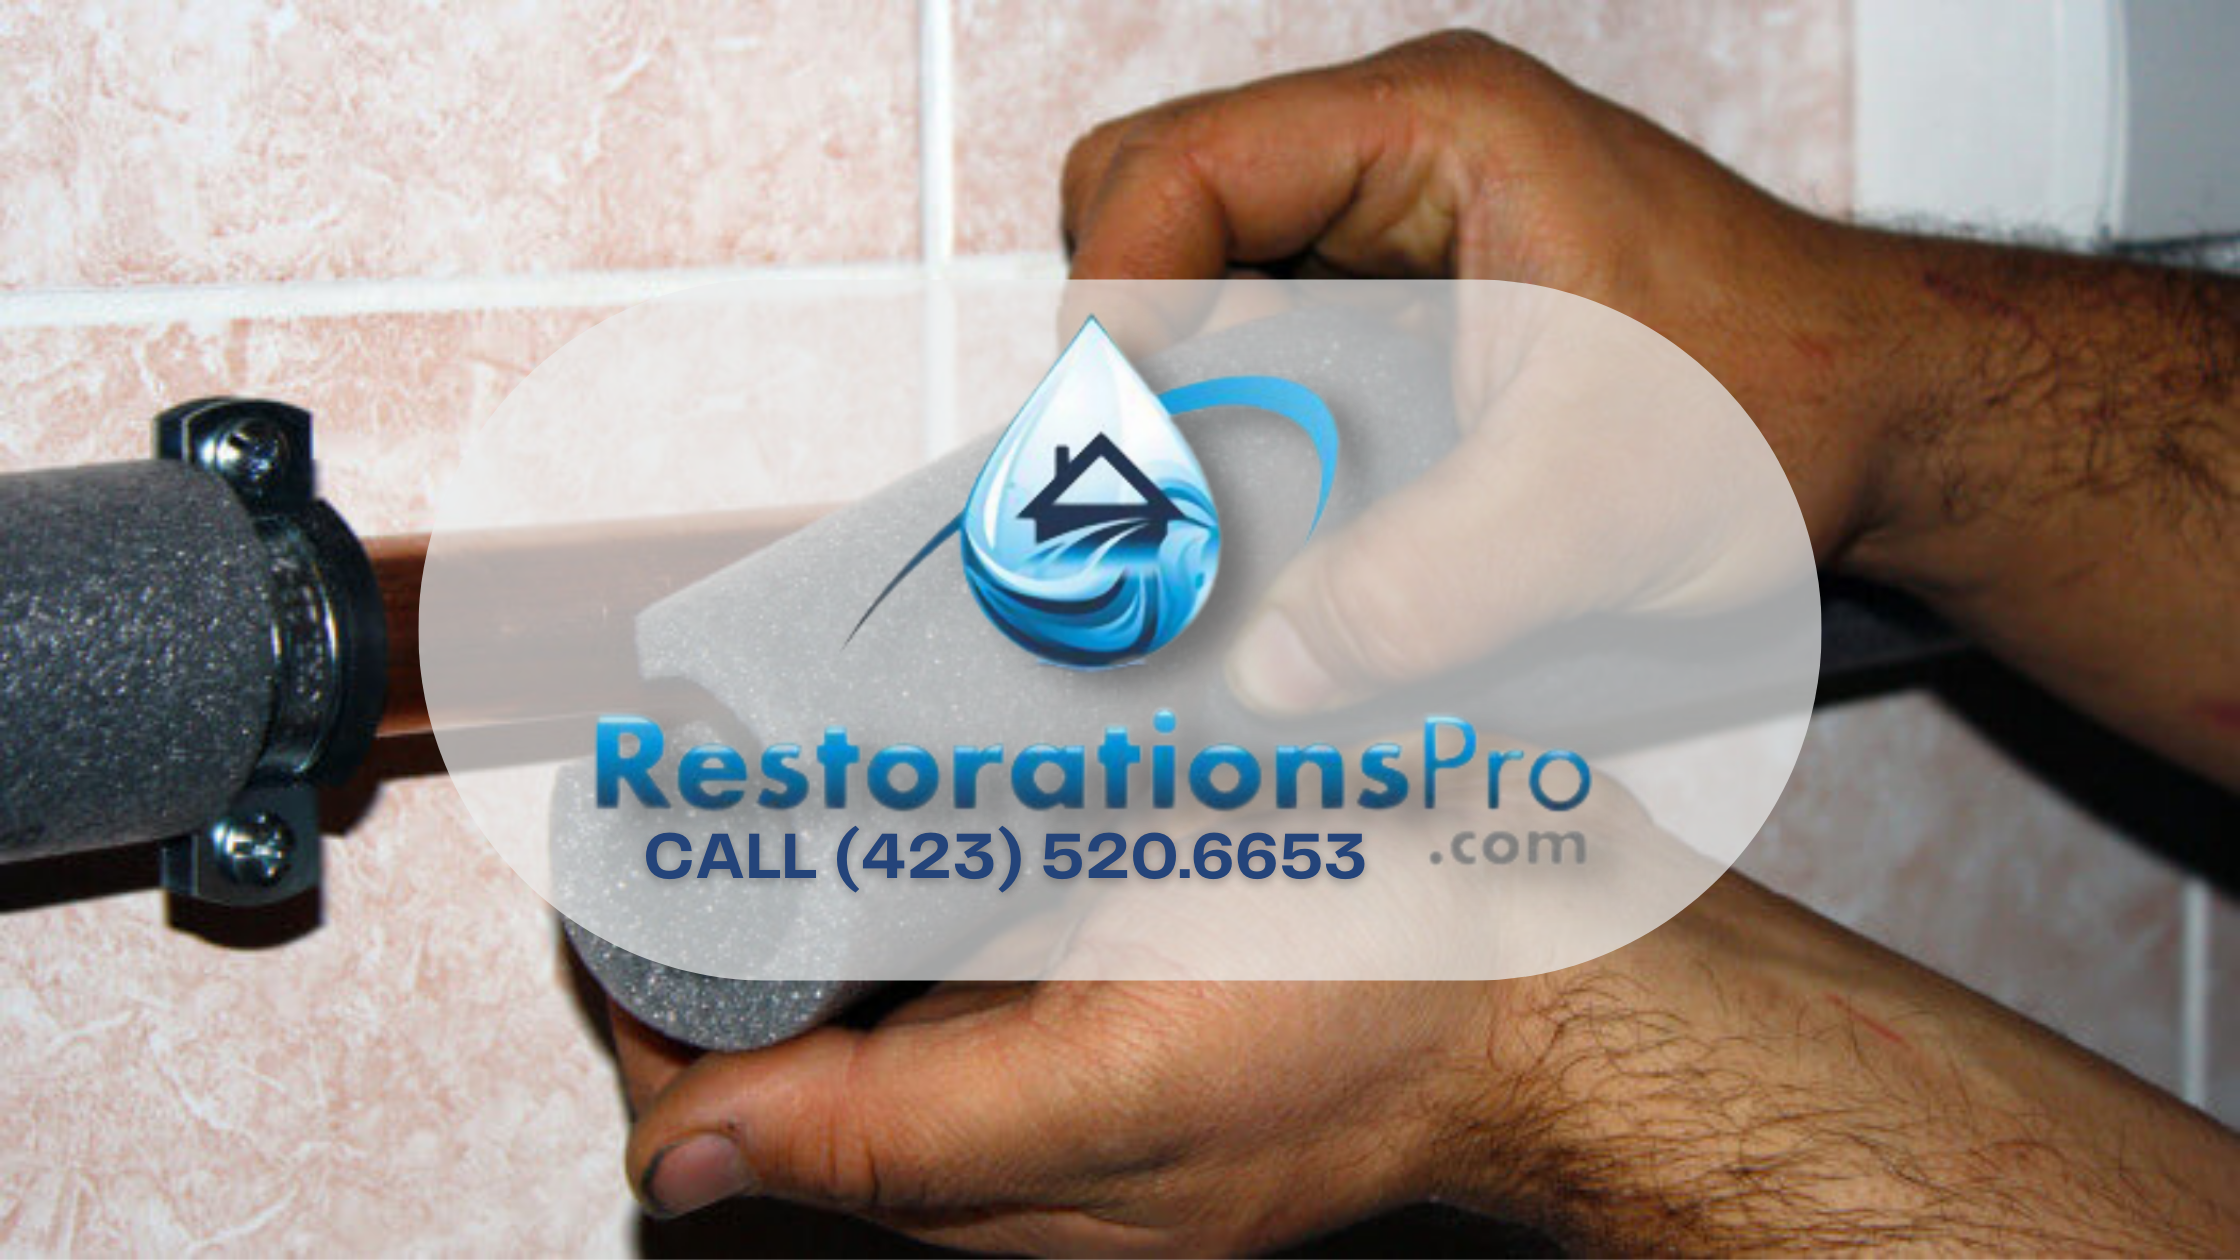 restoration pro services